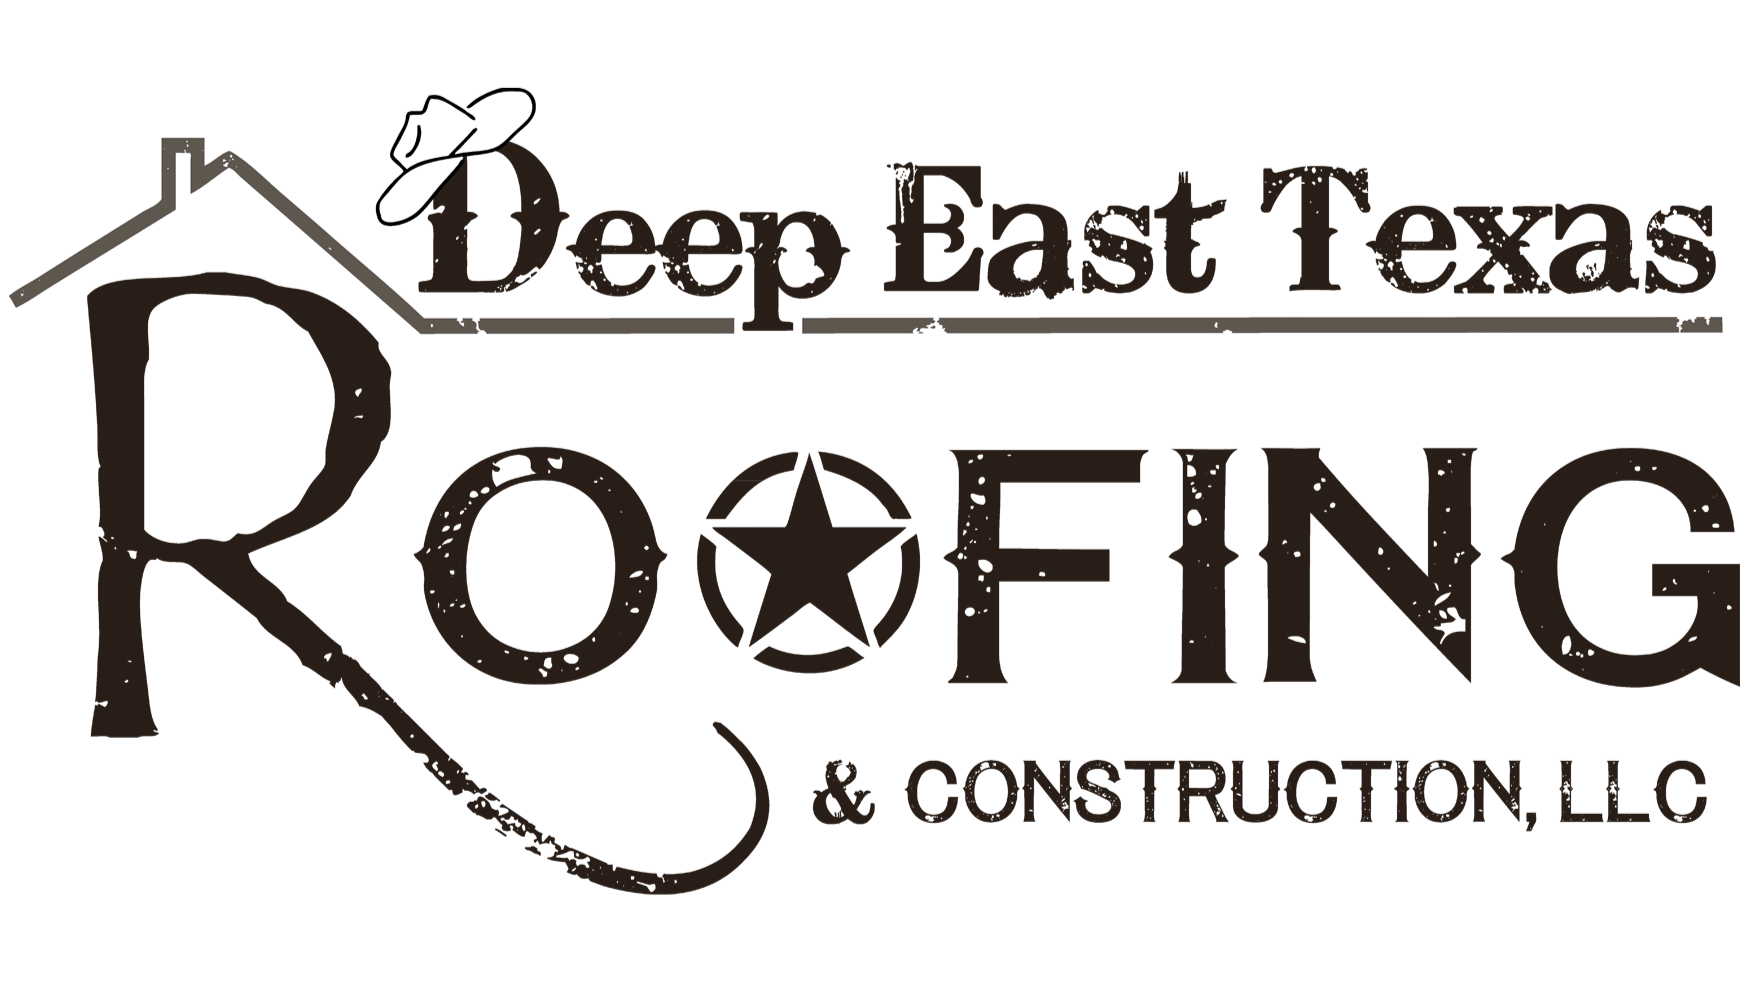 Deep East Texas Roofing & Construction Logo